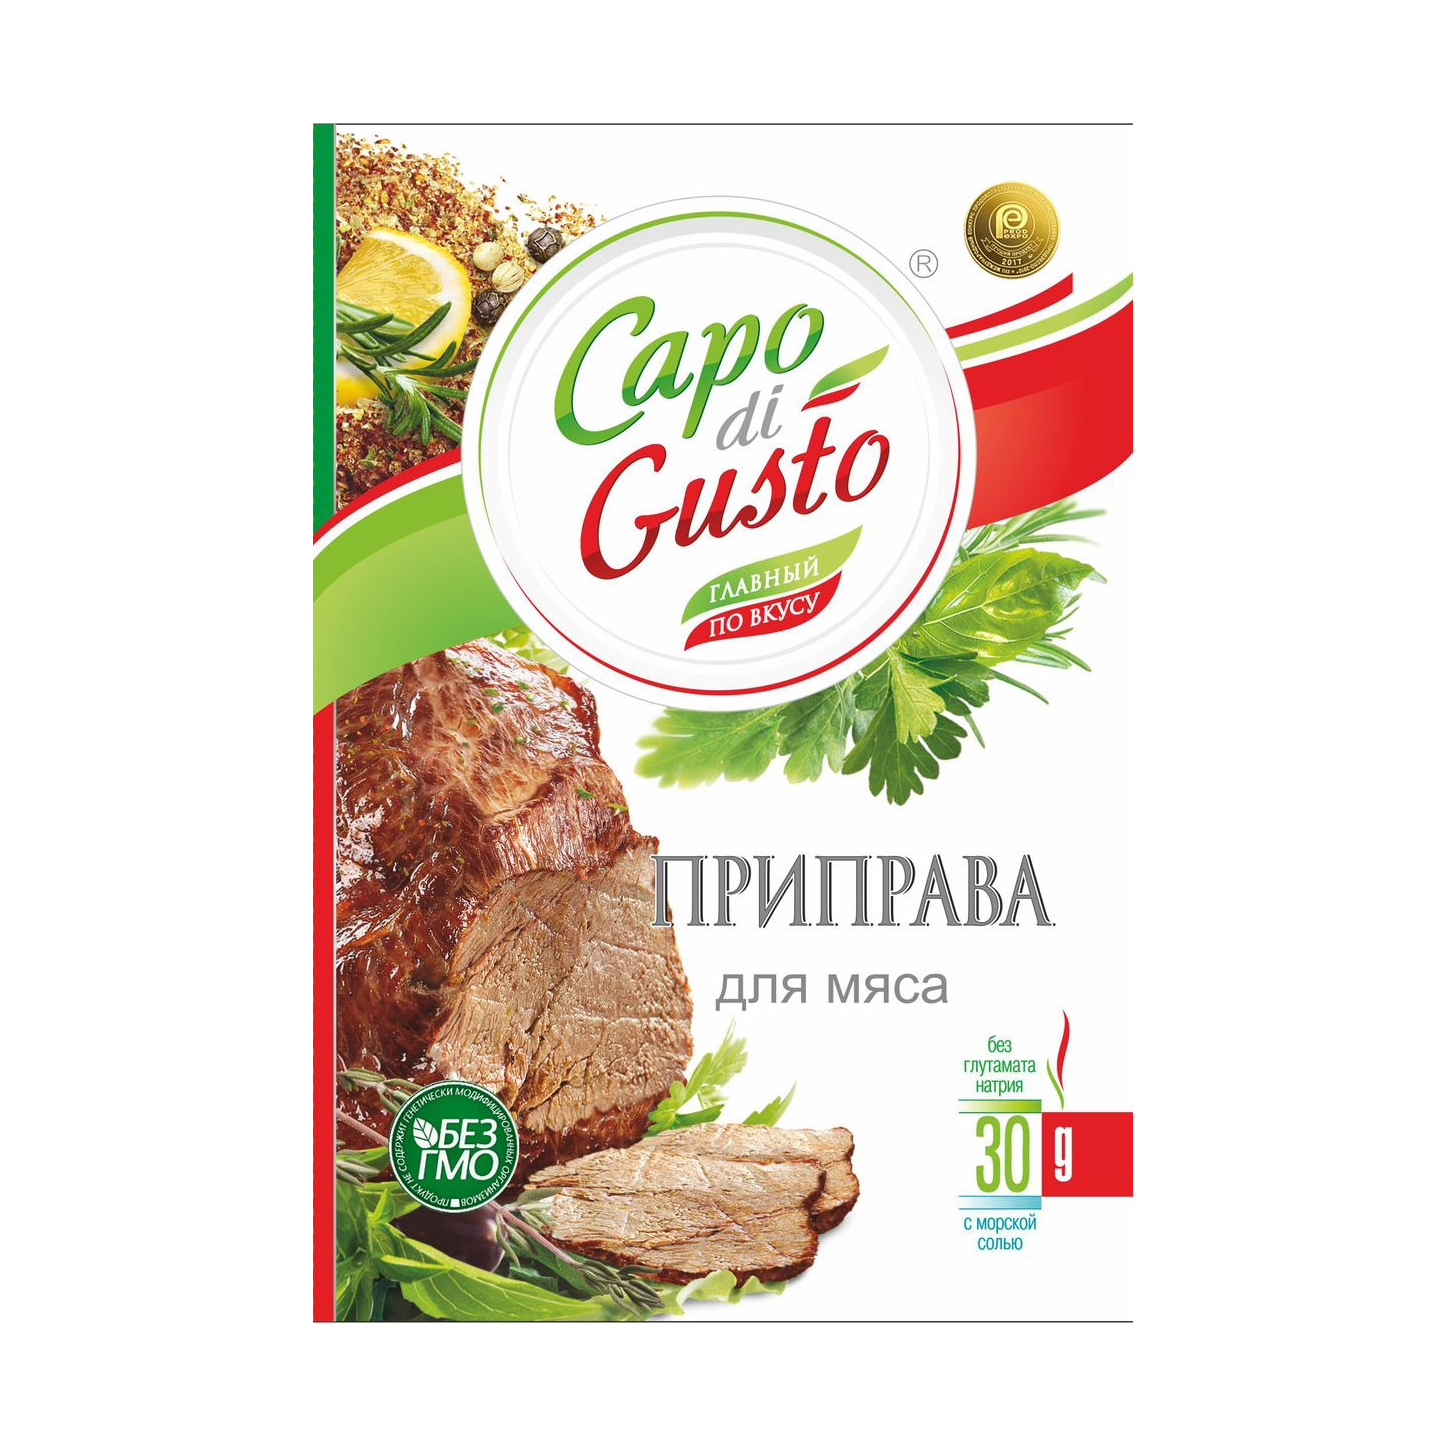 Приправа Capo di Gusto для мяса 30 г лук репчатый штуттгартер ризен седек